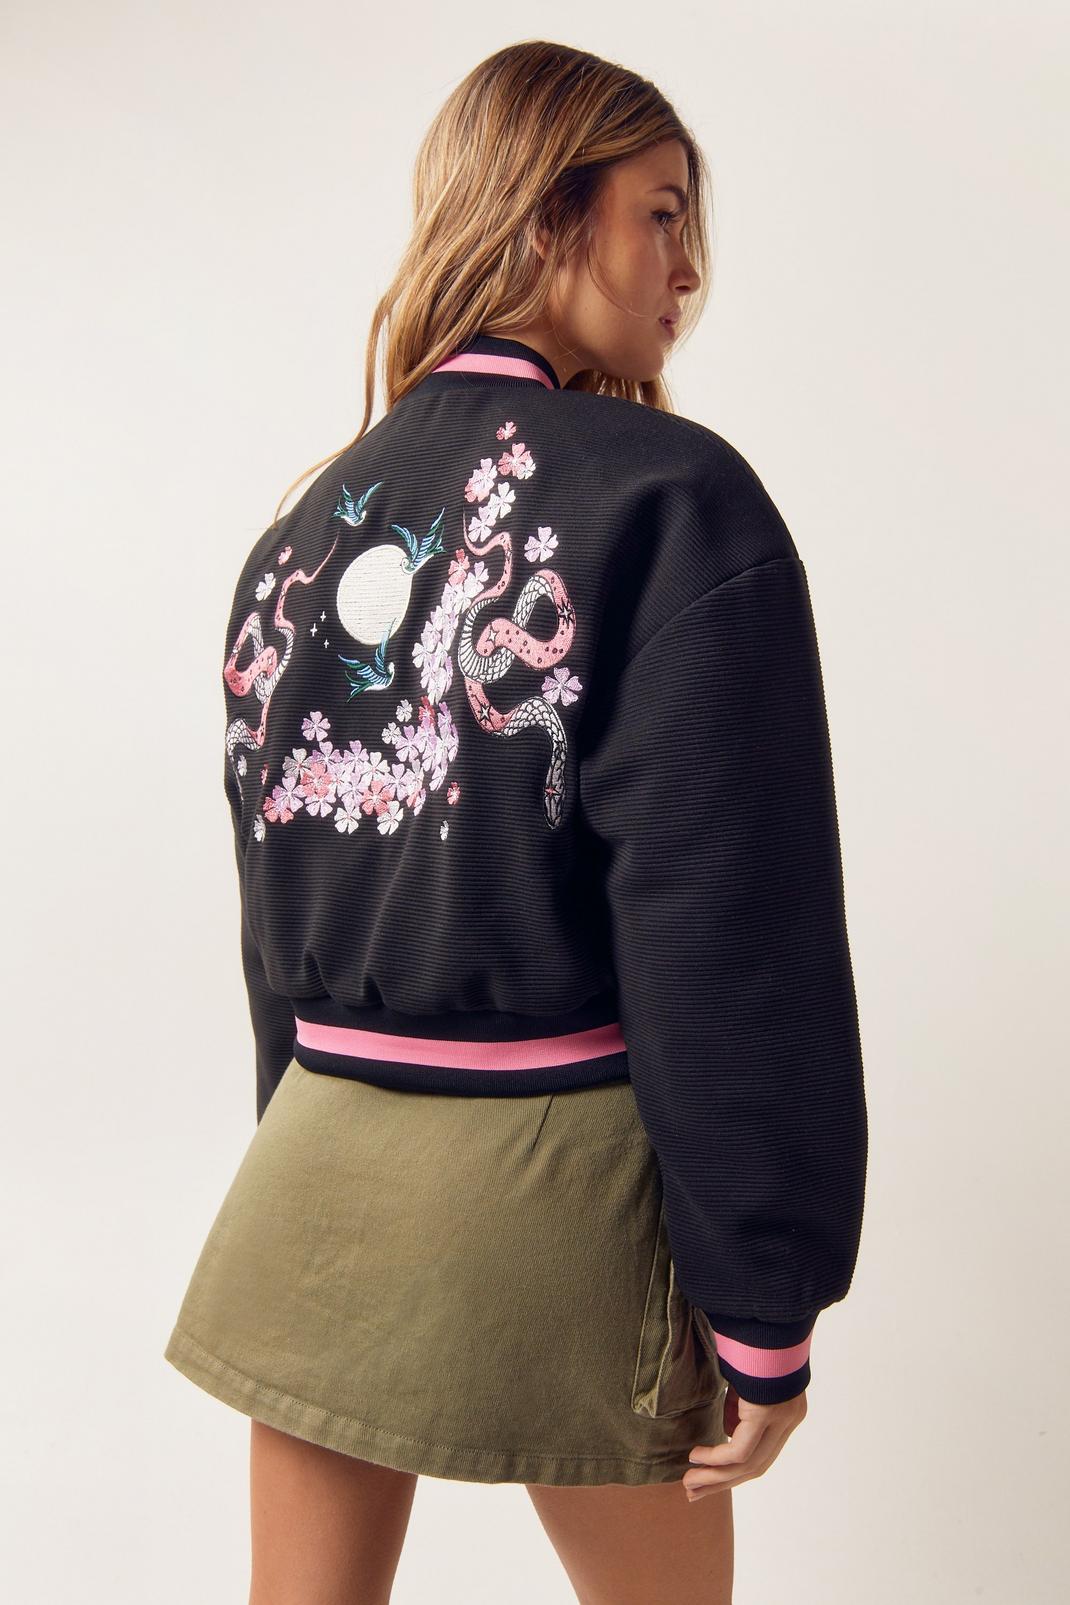 Varsity embroidered jacket